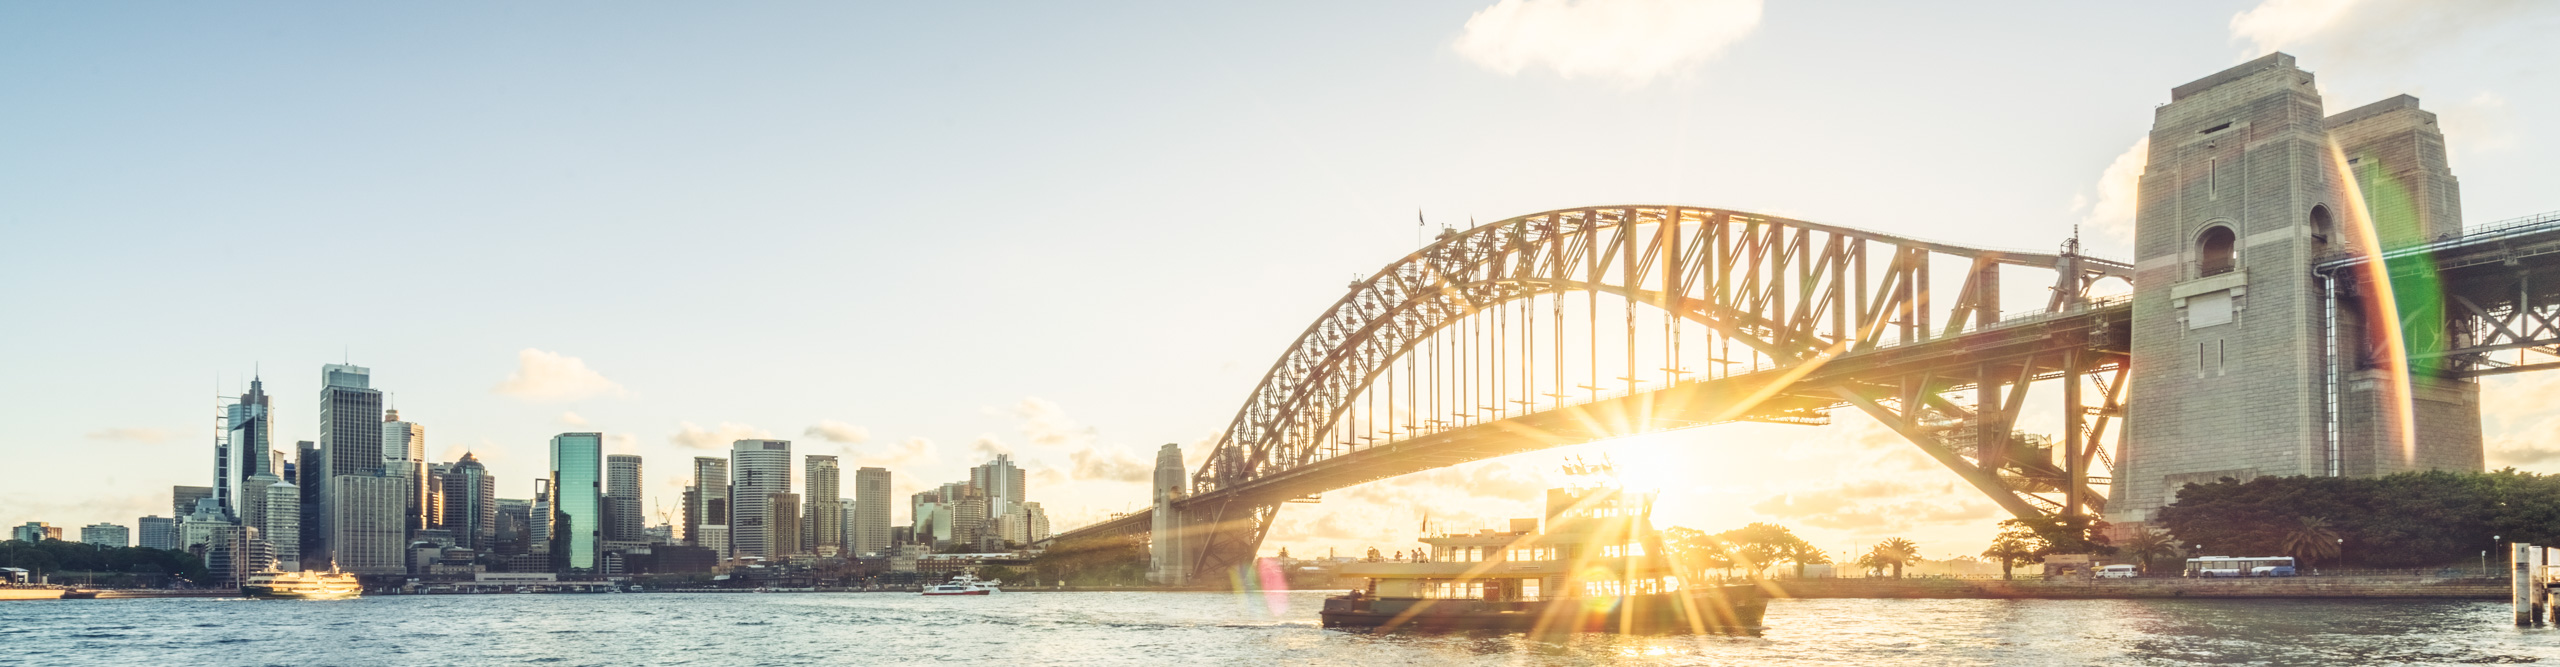 Sydney city skyline and harbour bridge against sunset sky, Australia.